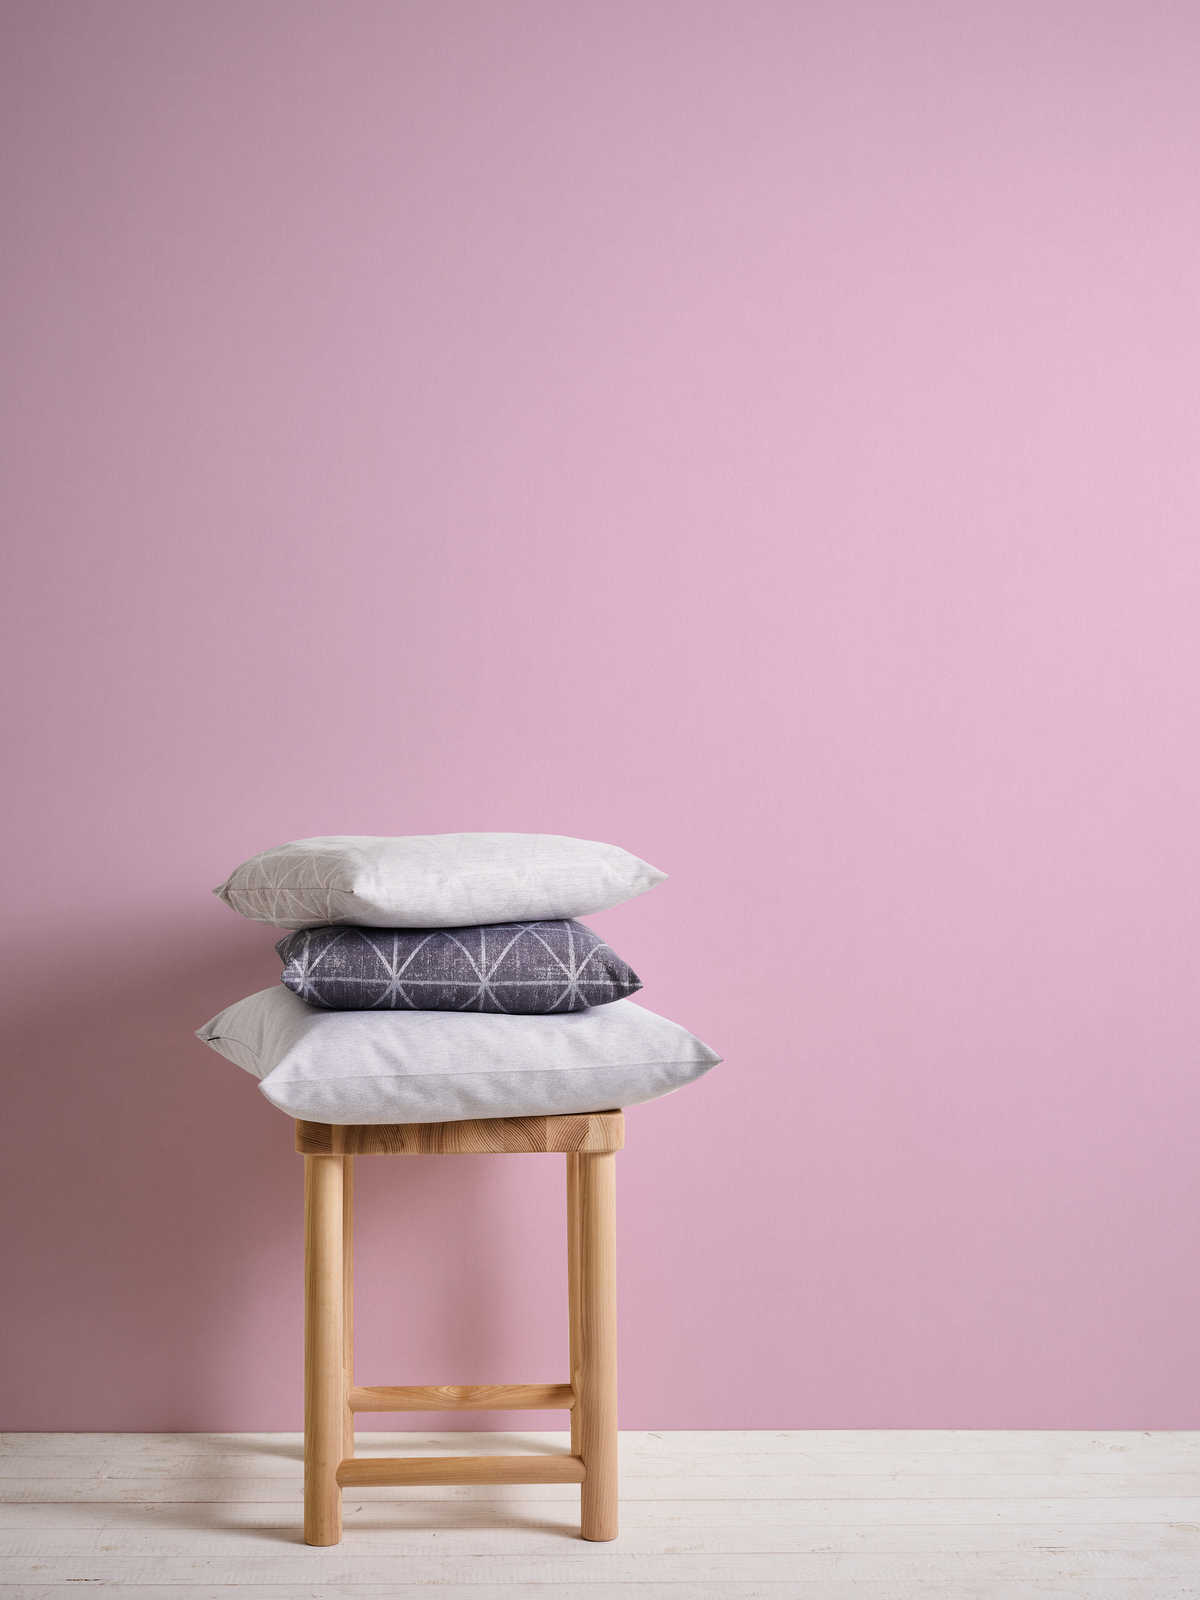             Nursery wallpaper girl uni - pink
        